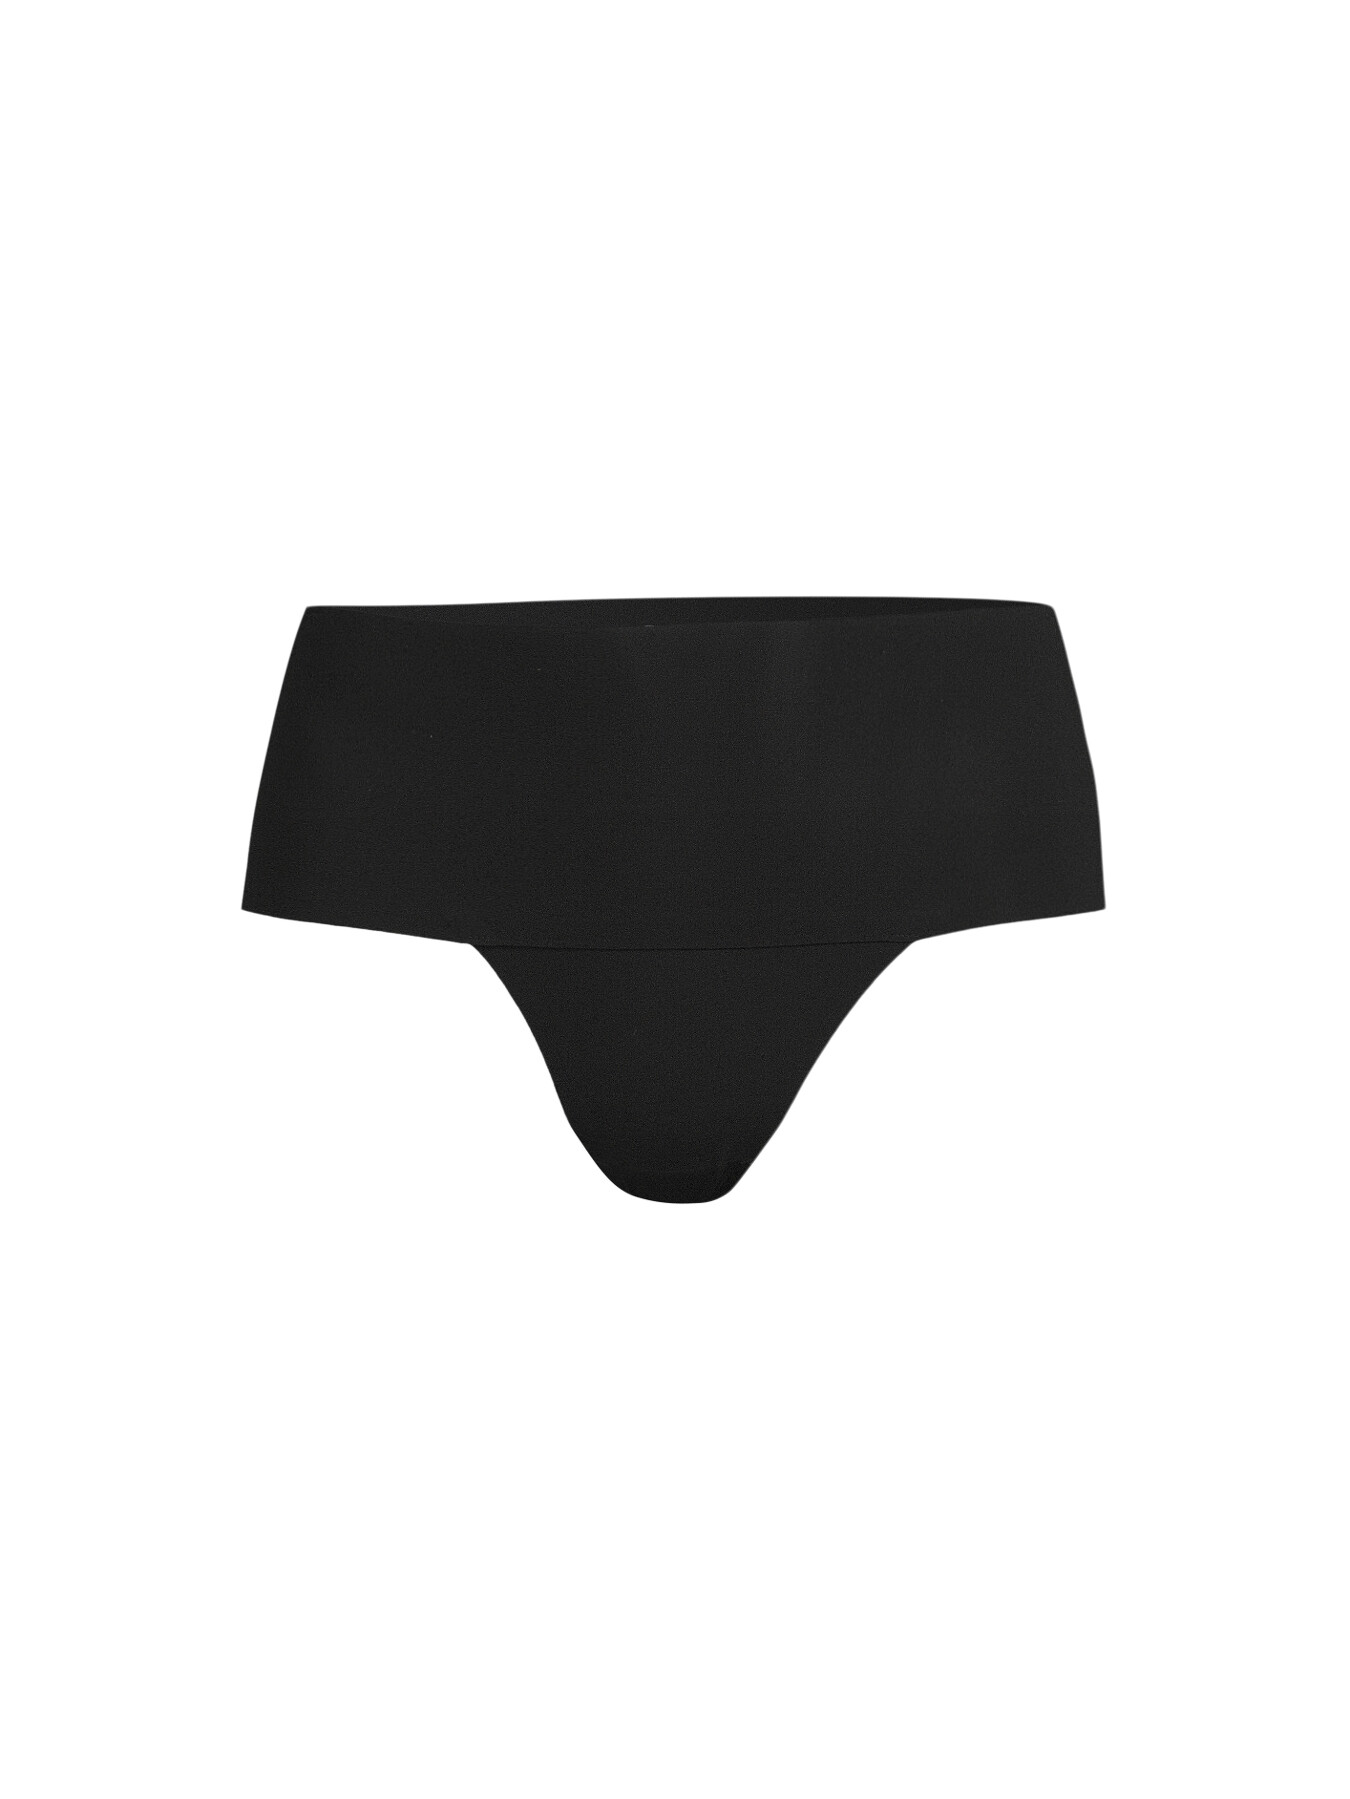 Shop Spanx Women's Undie-tectable Thong Black